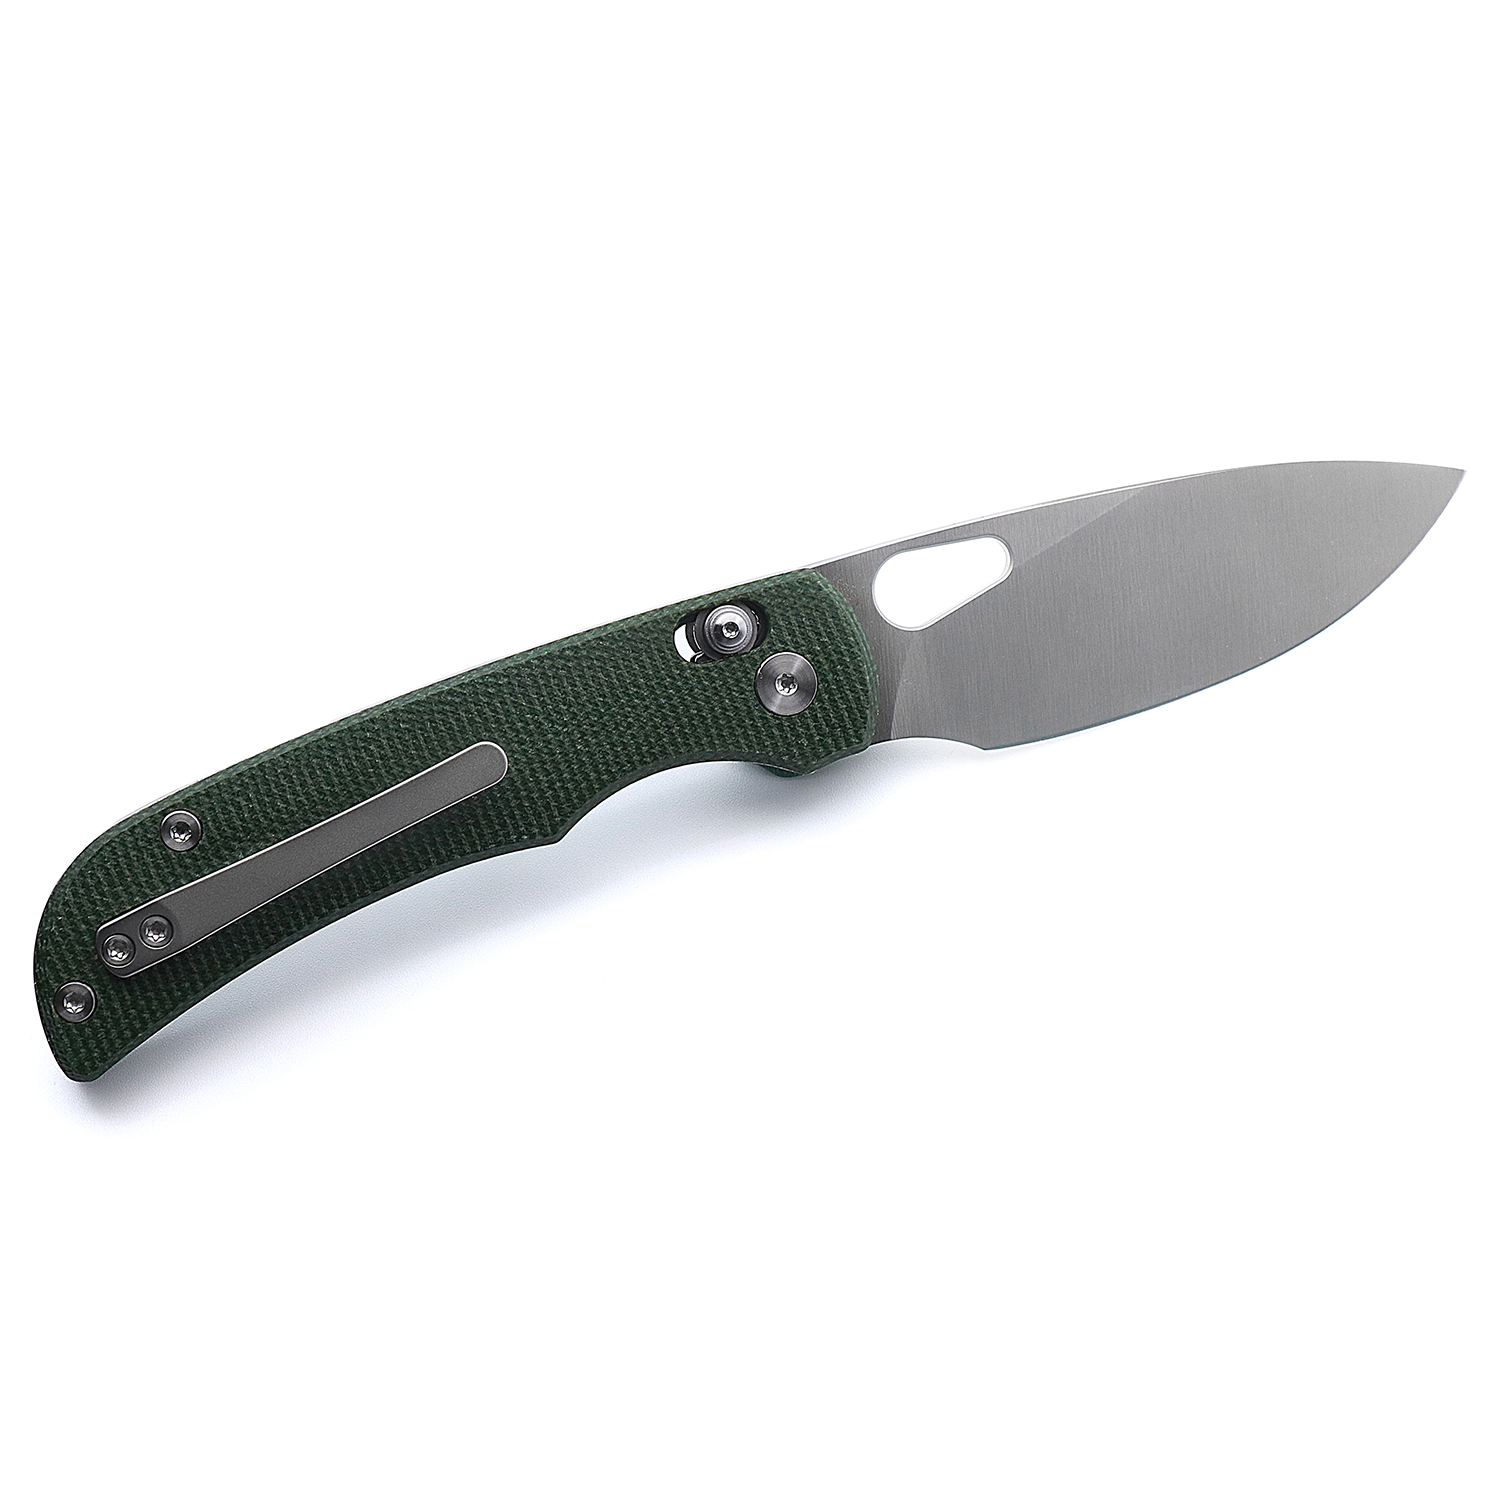 M Miguron Knives Moyarl Pocket Folding Knife 3.5